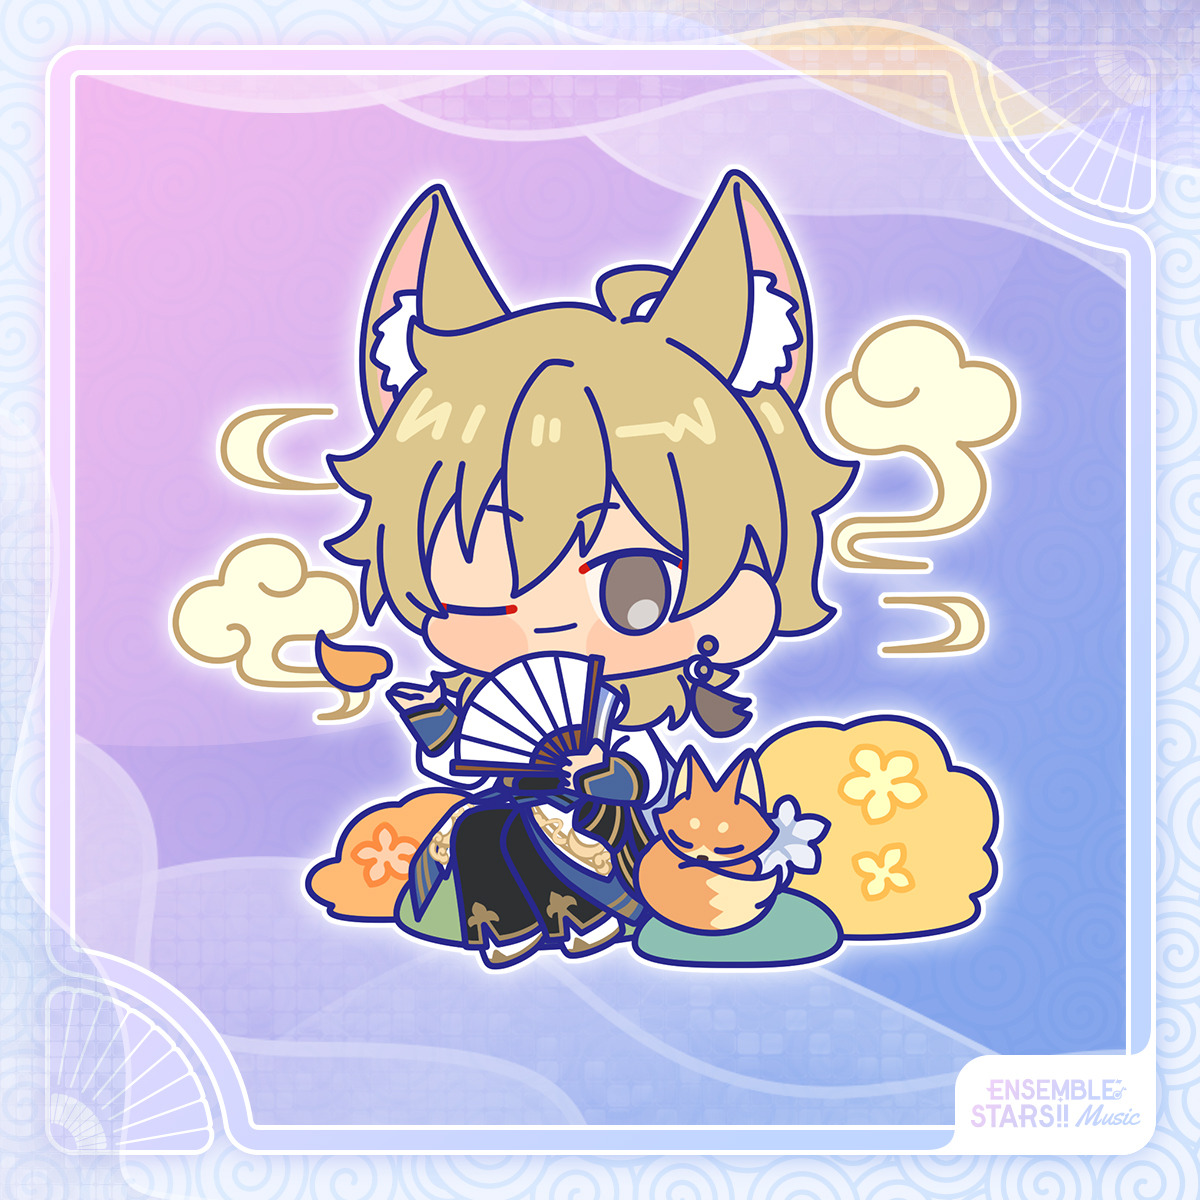 Official art of Kaoru with fox ears, sitting beside a sleeping fox.